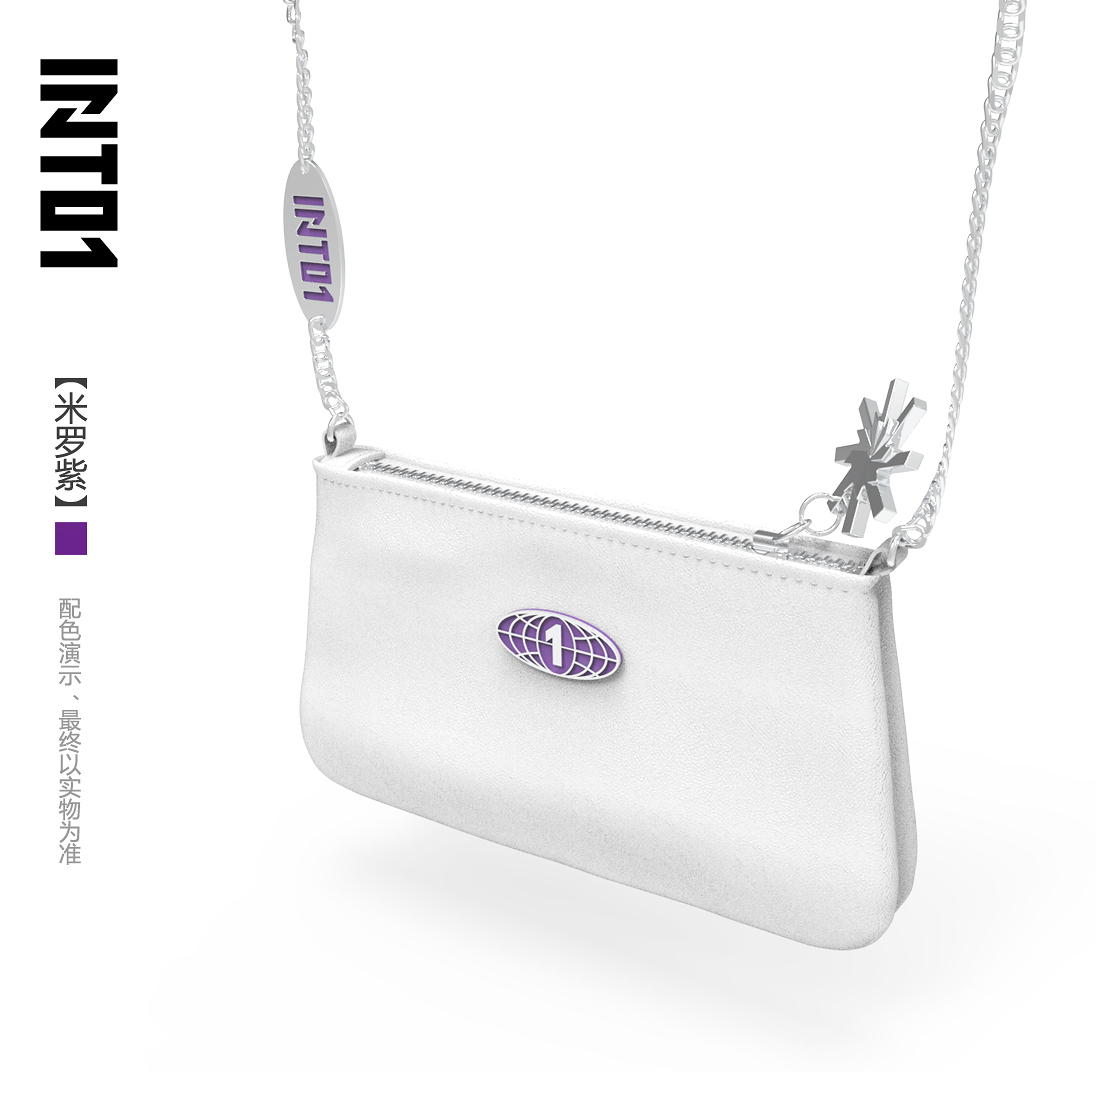 Miro PurpleIN TO 1 Mahjong bag Mini fashion Female bag Simplicity Mobile phone bag Small bag One shoulder Axillary bag